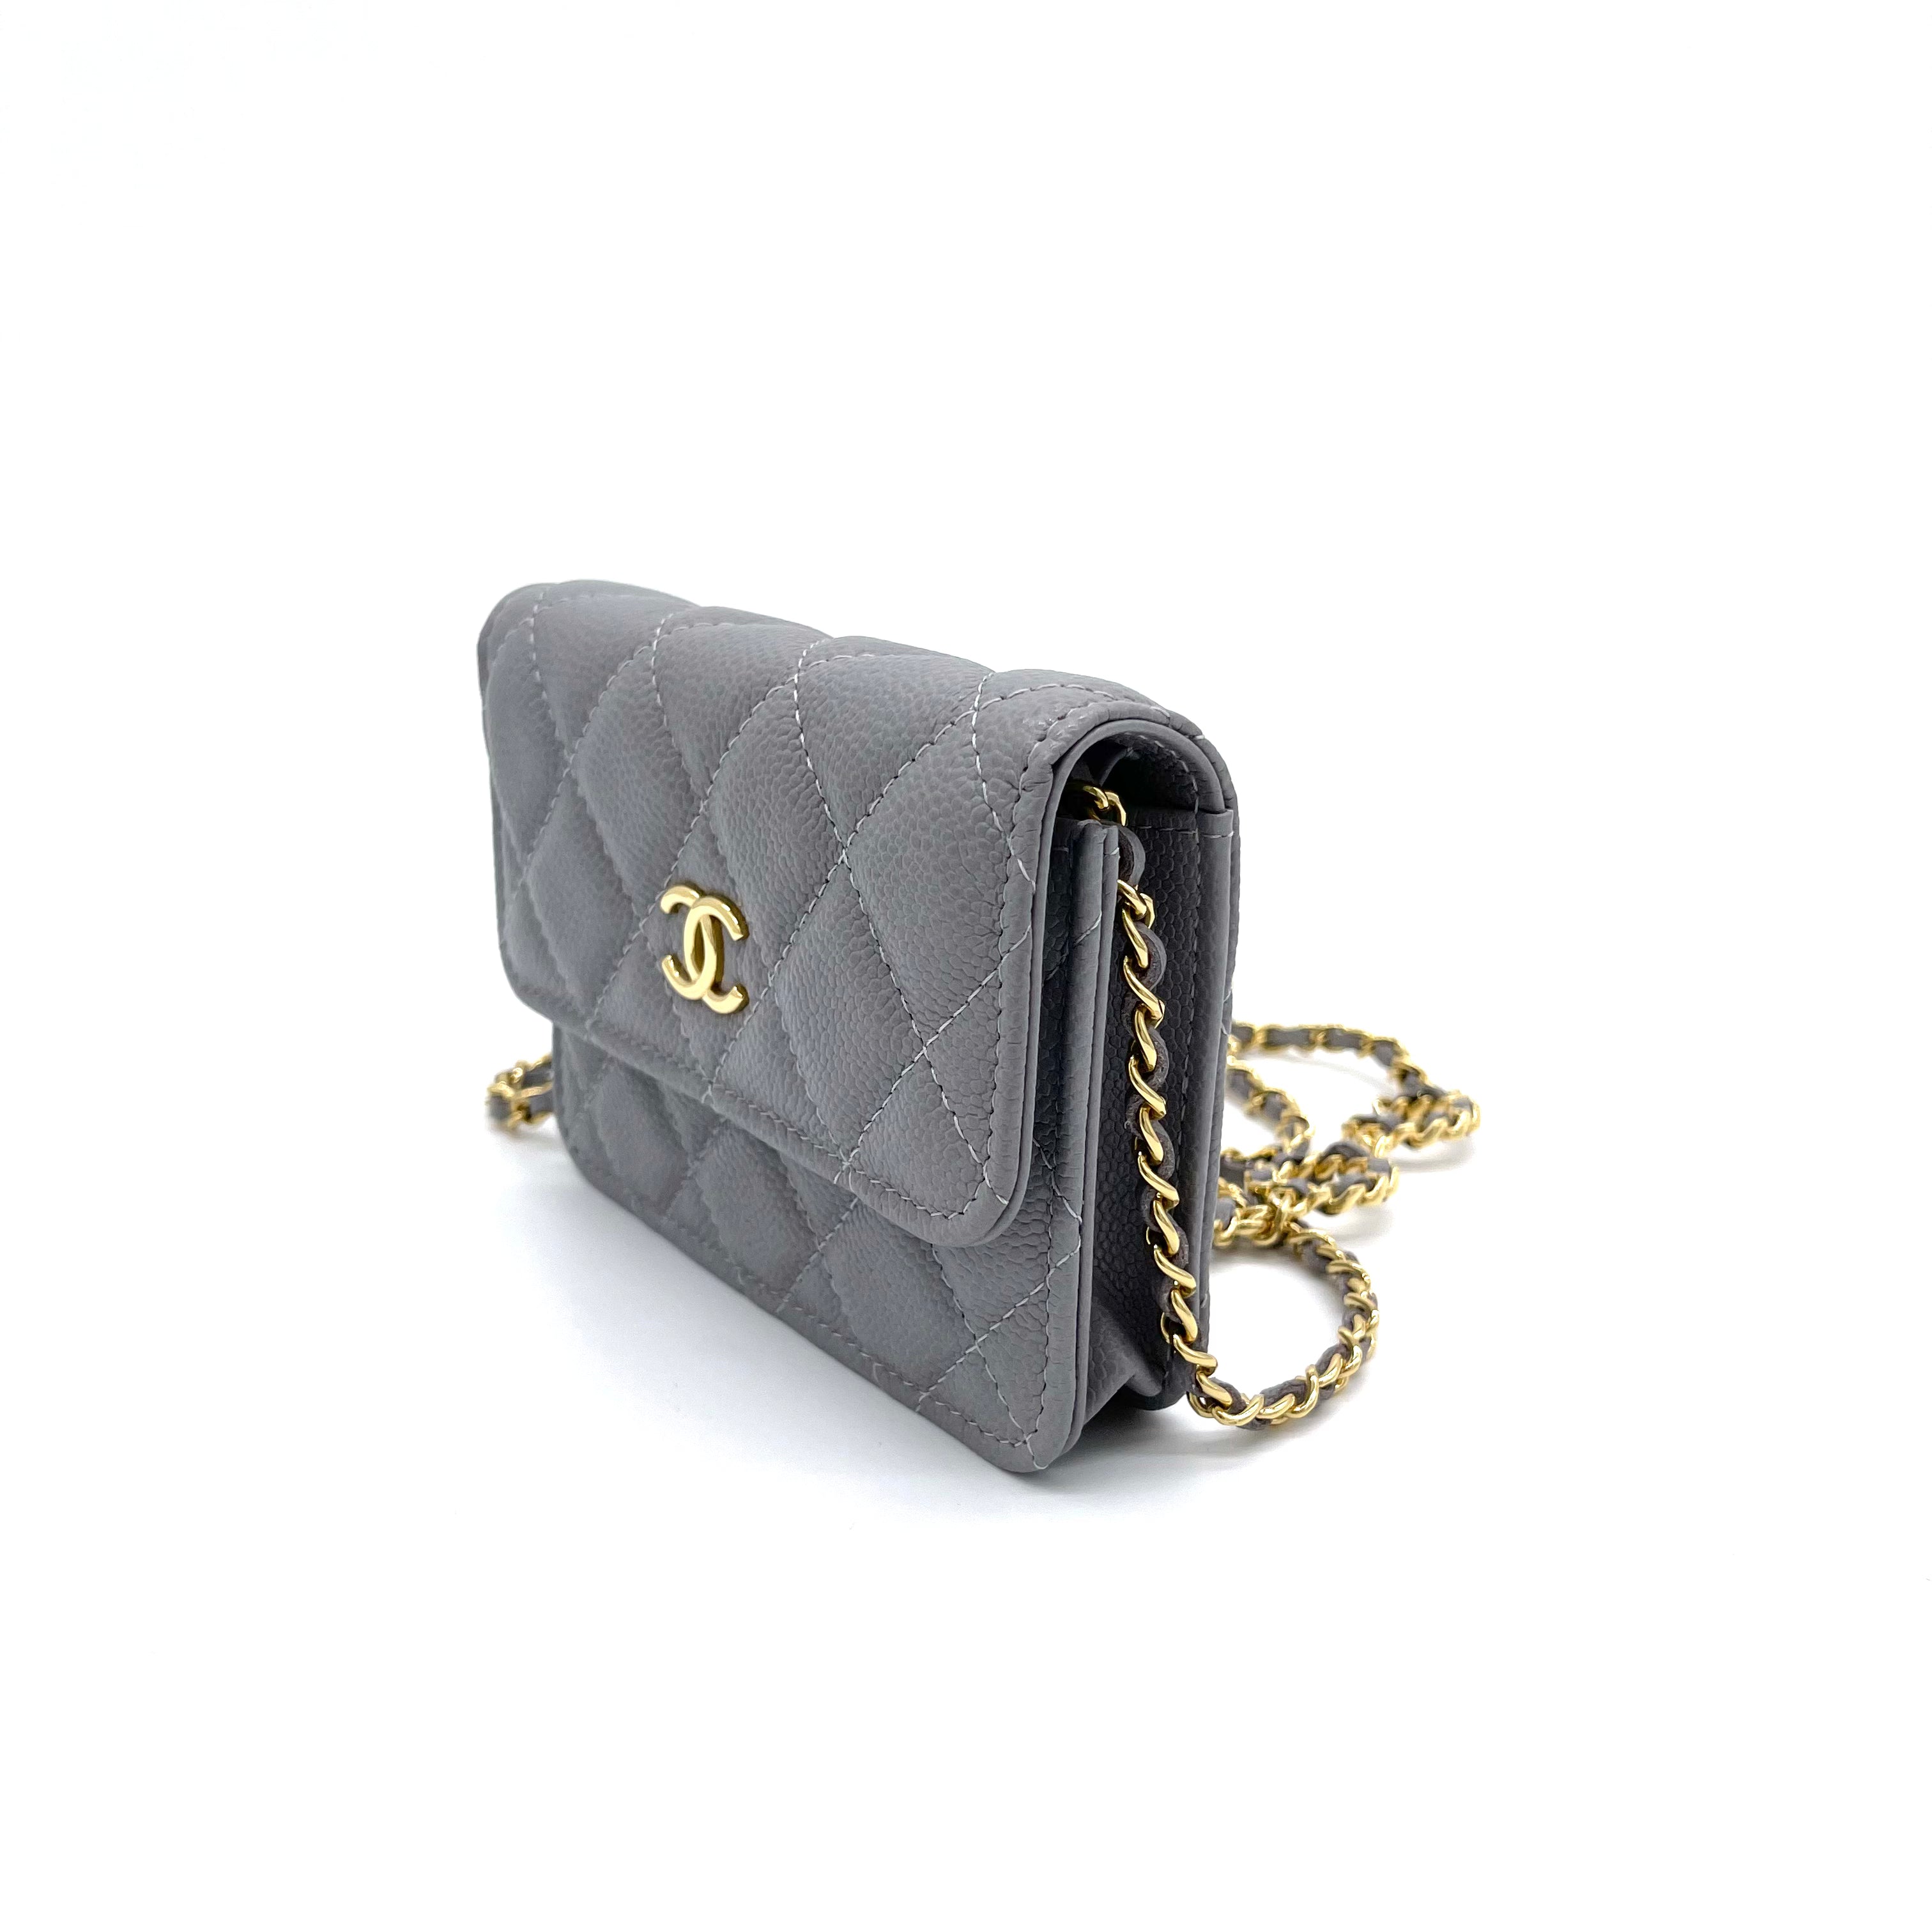 New Chanel classic mini Chain Clutch Rect. Beige caramel caviar gold hw Bag